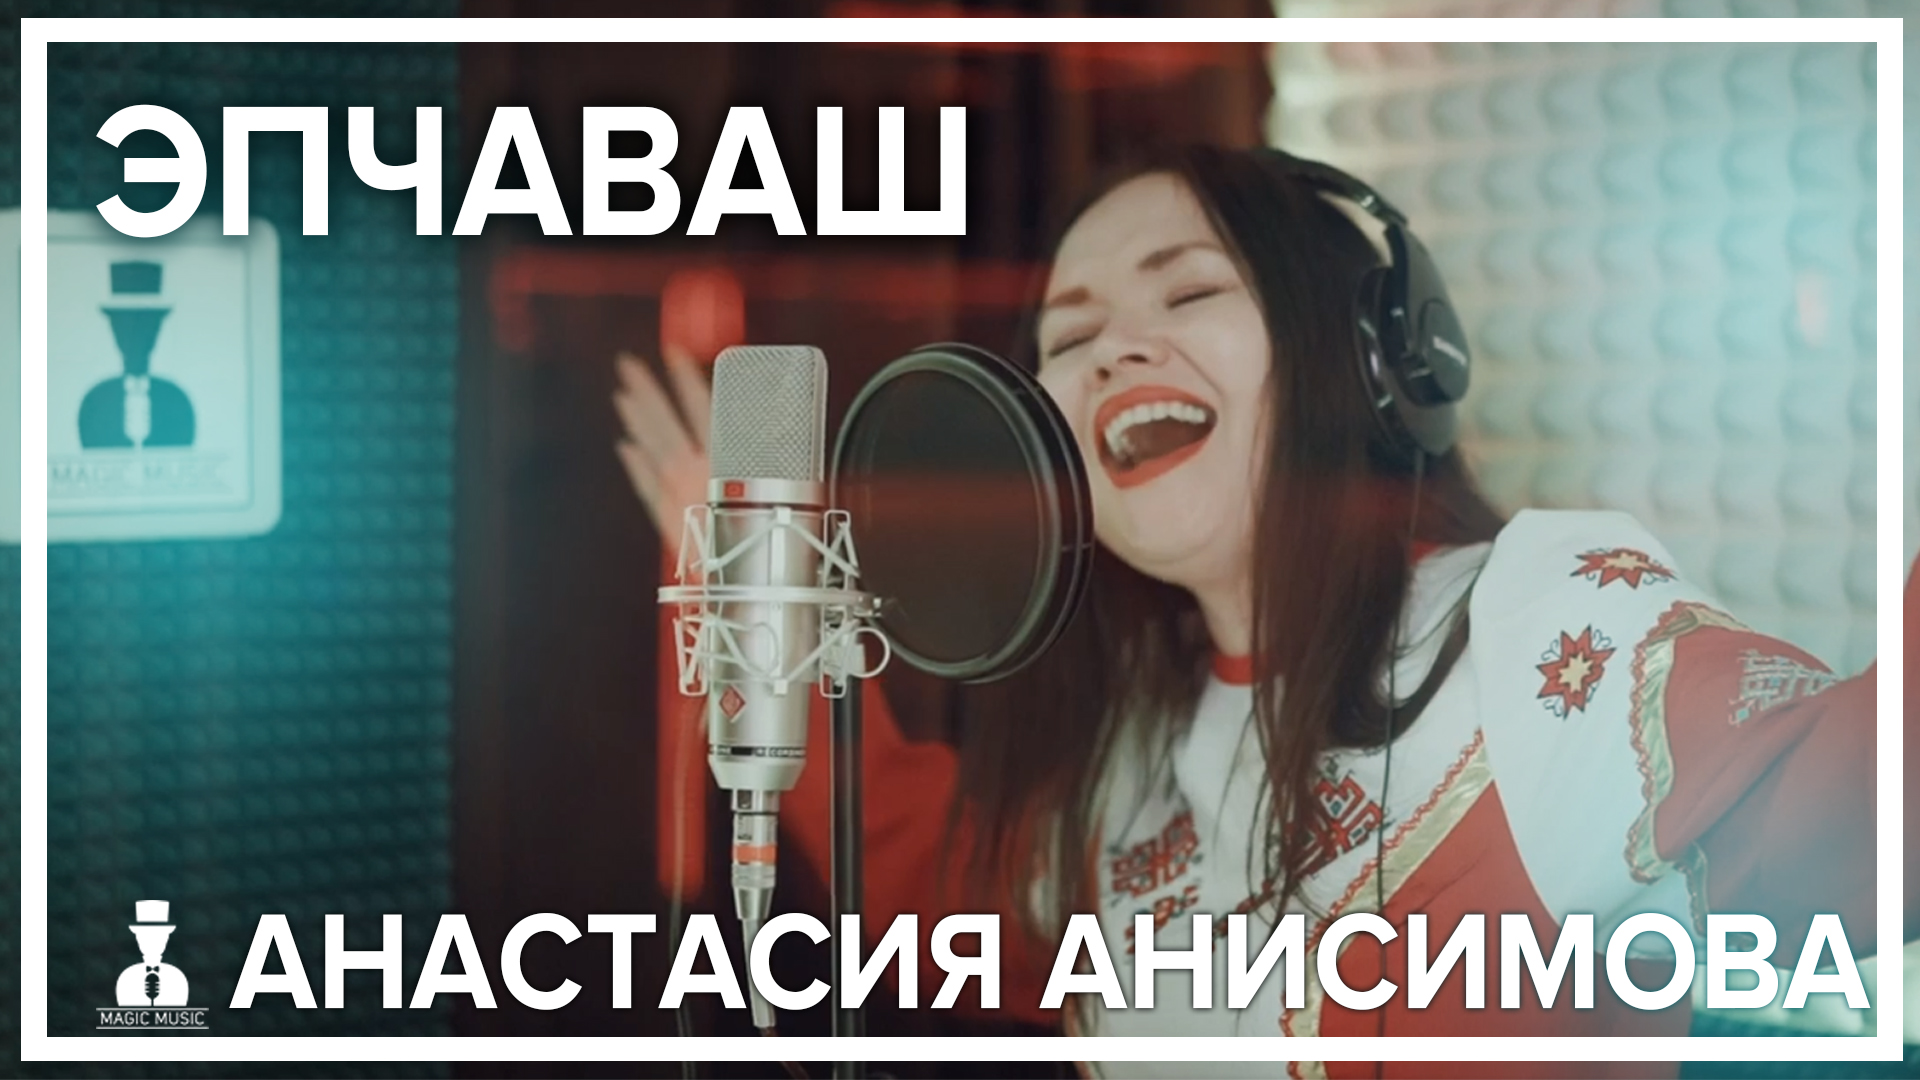 Анастасия Анисимова - Эпчаваш.mp4